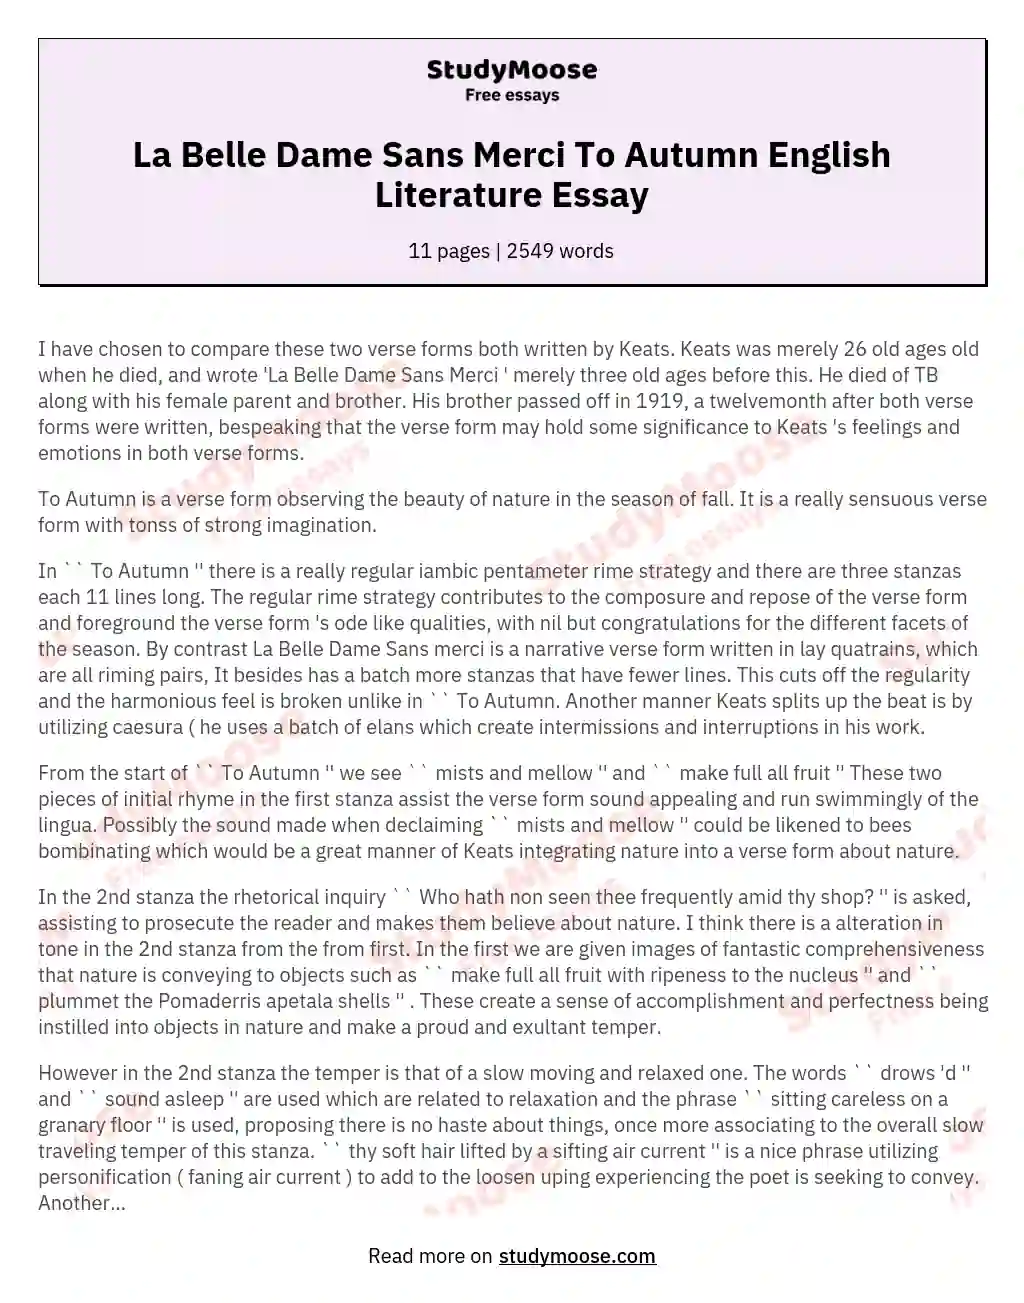 La Belle Dame Sans Merci To Autumn English Literature Essay essay